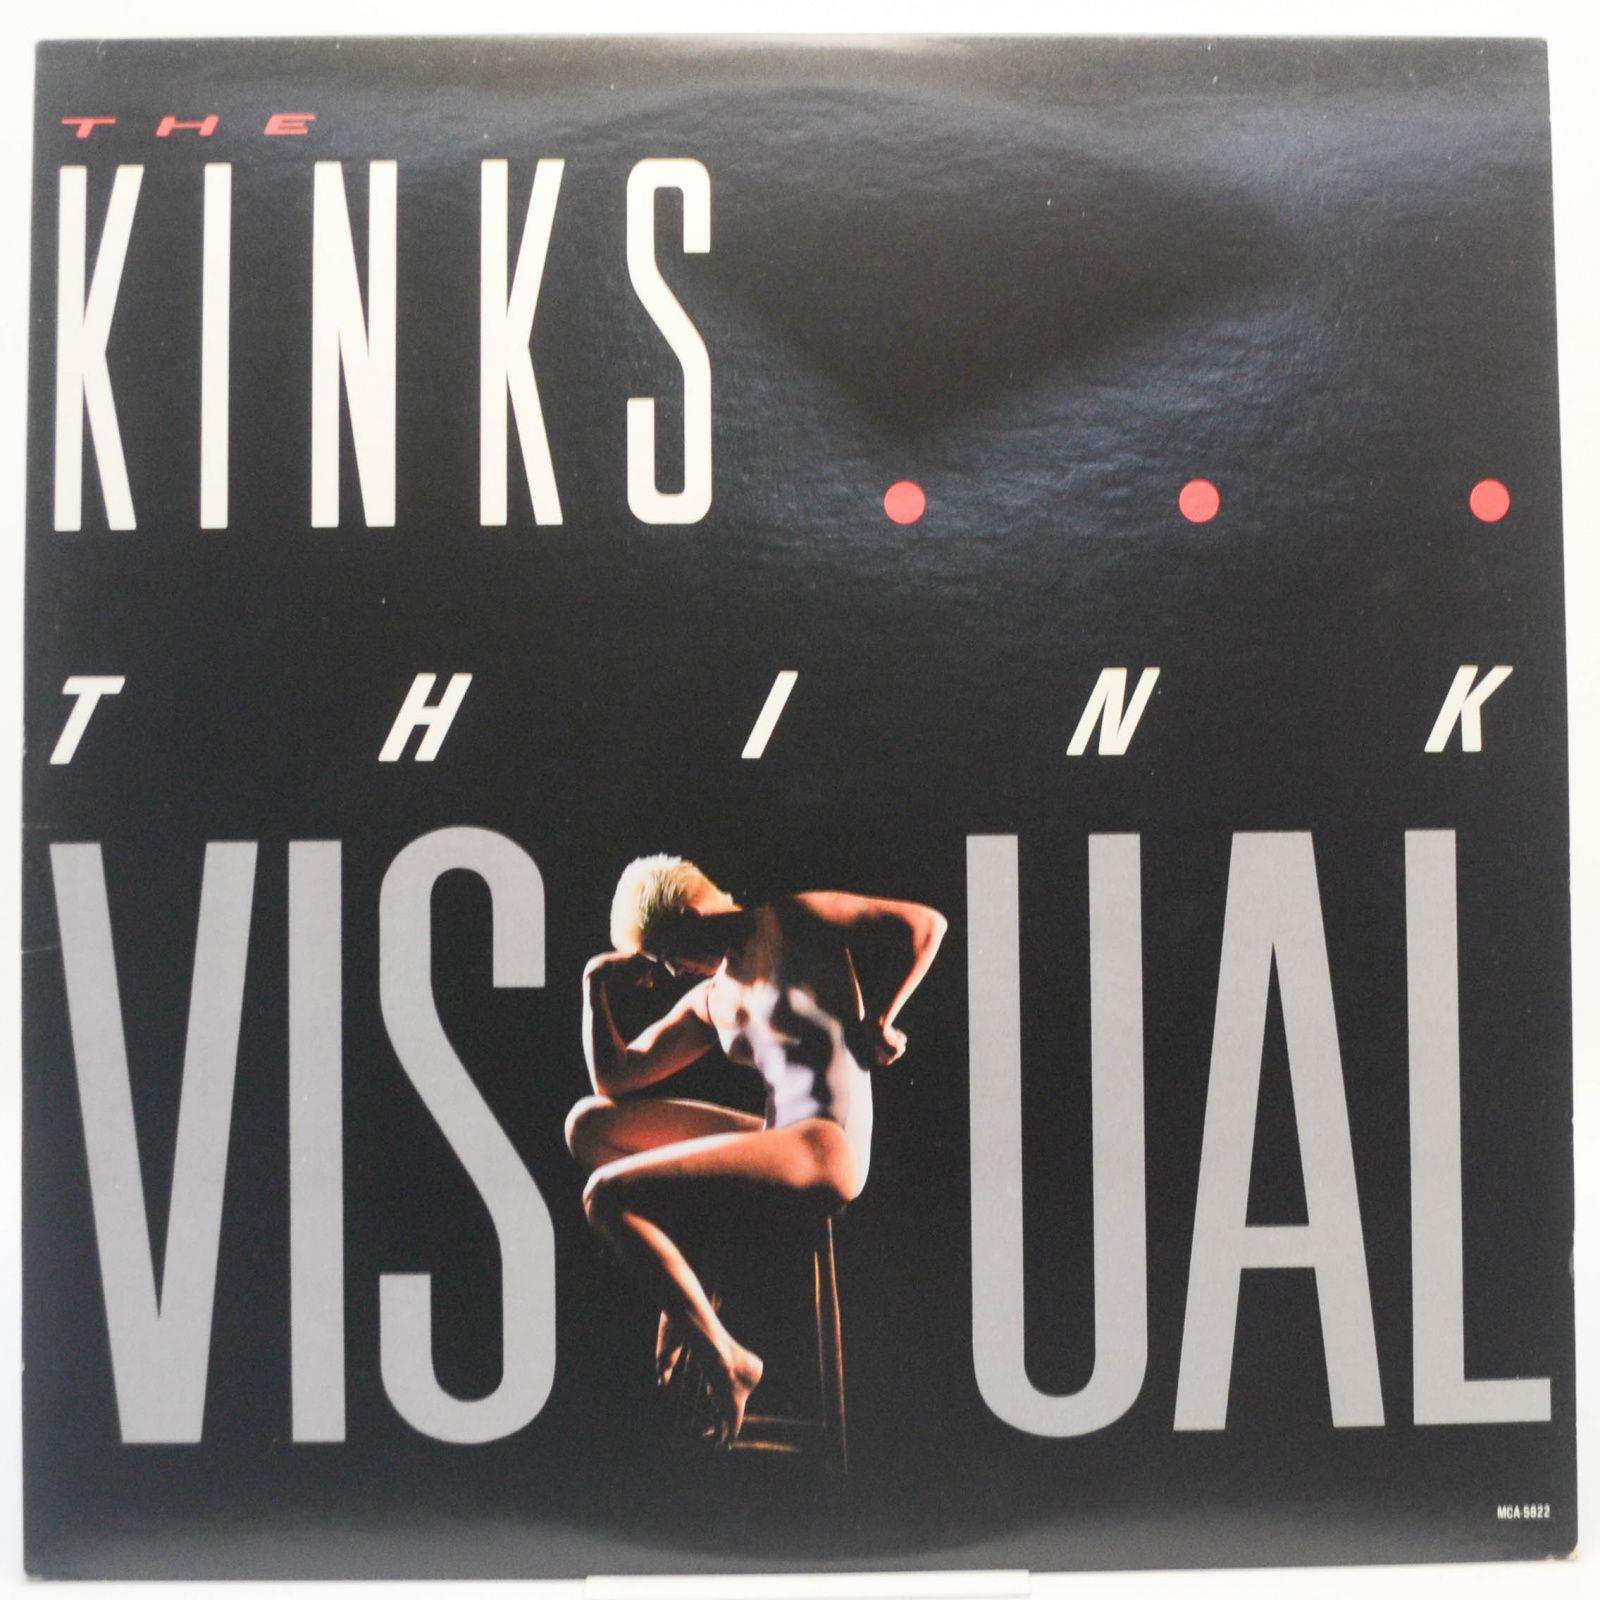 Think Visual (USA), 1986